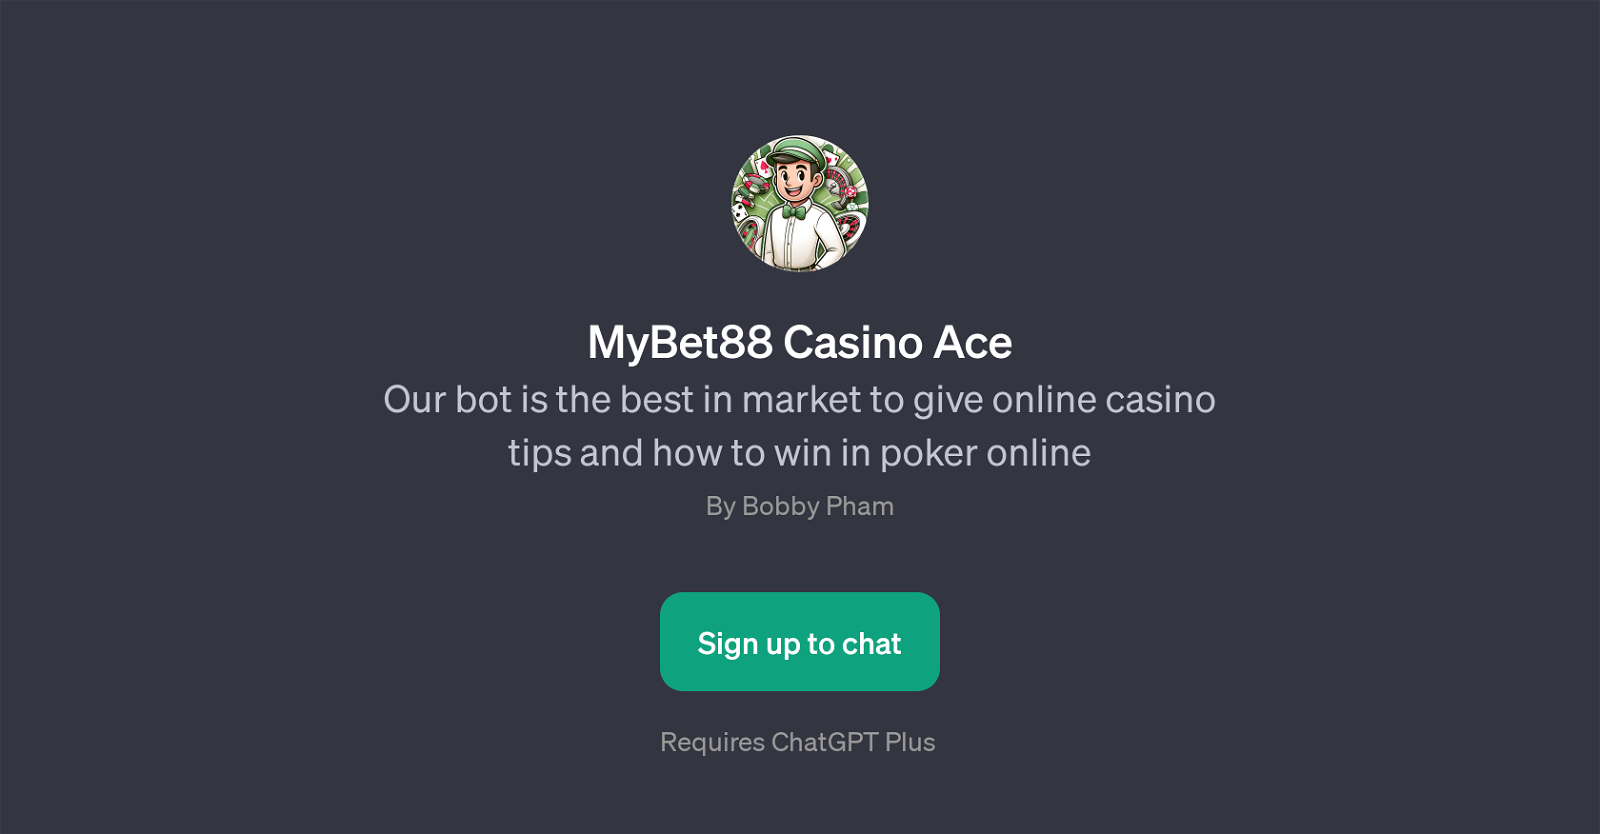 MyBet88 Casino Ace website